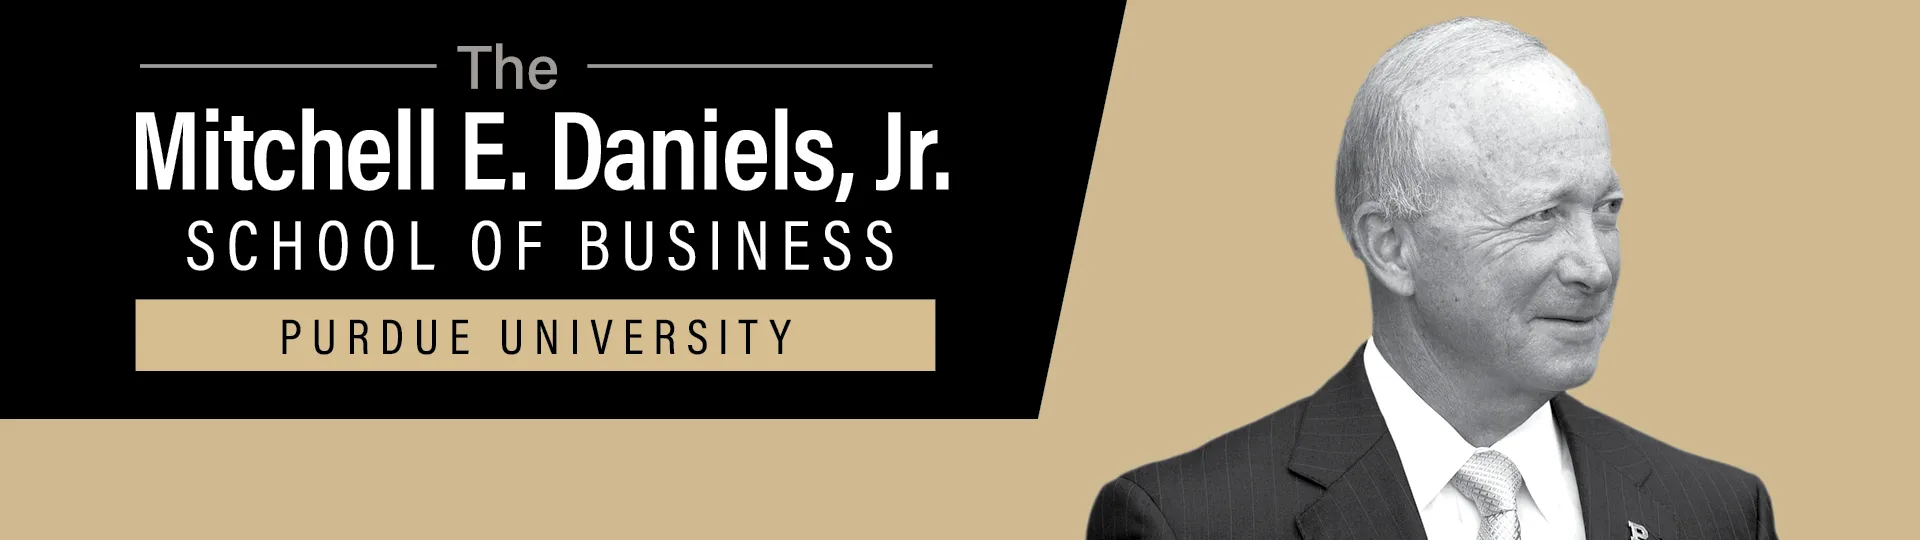 The Mitchell E. Daniels, Jr. School of Business Purdue University